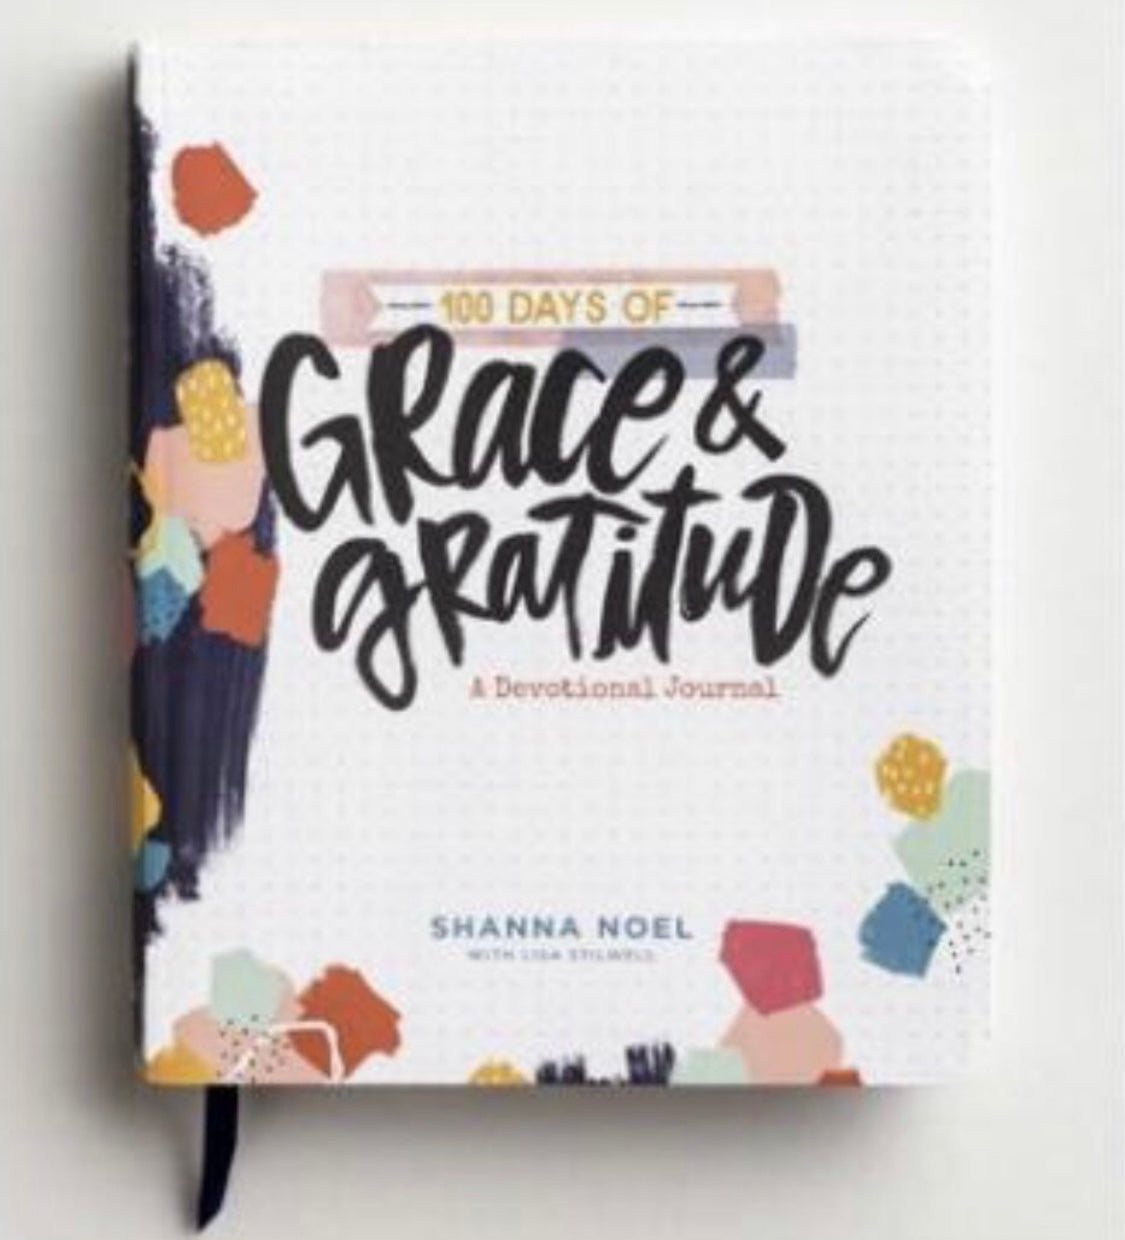 100 days of Grace & Gratitude by Shanna Noel